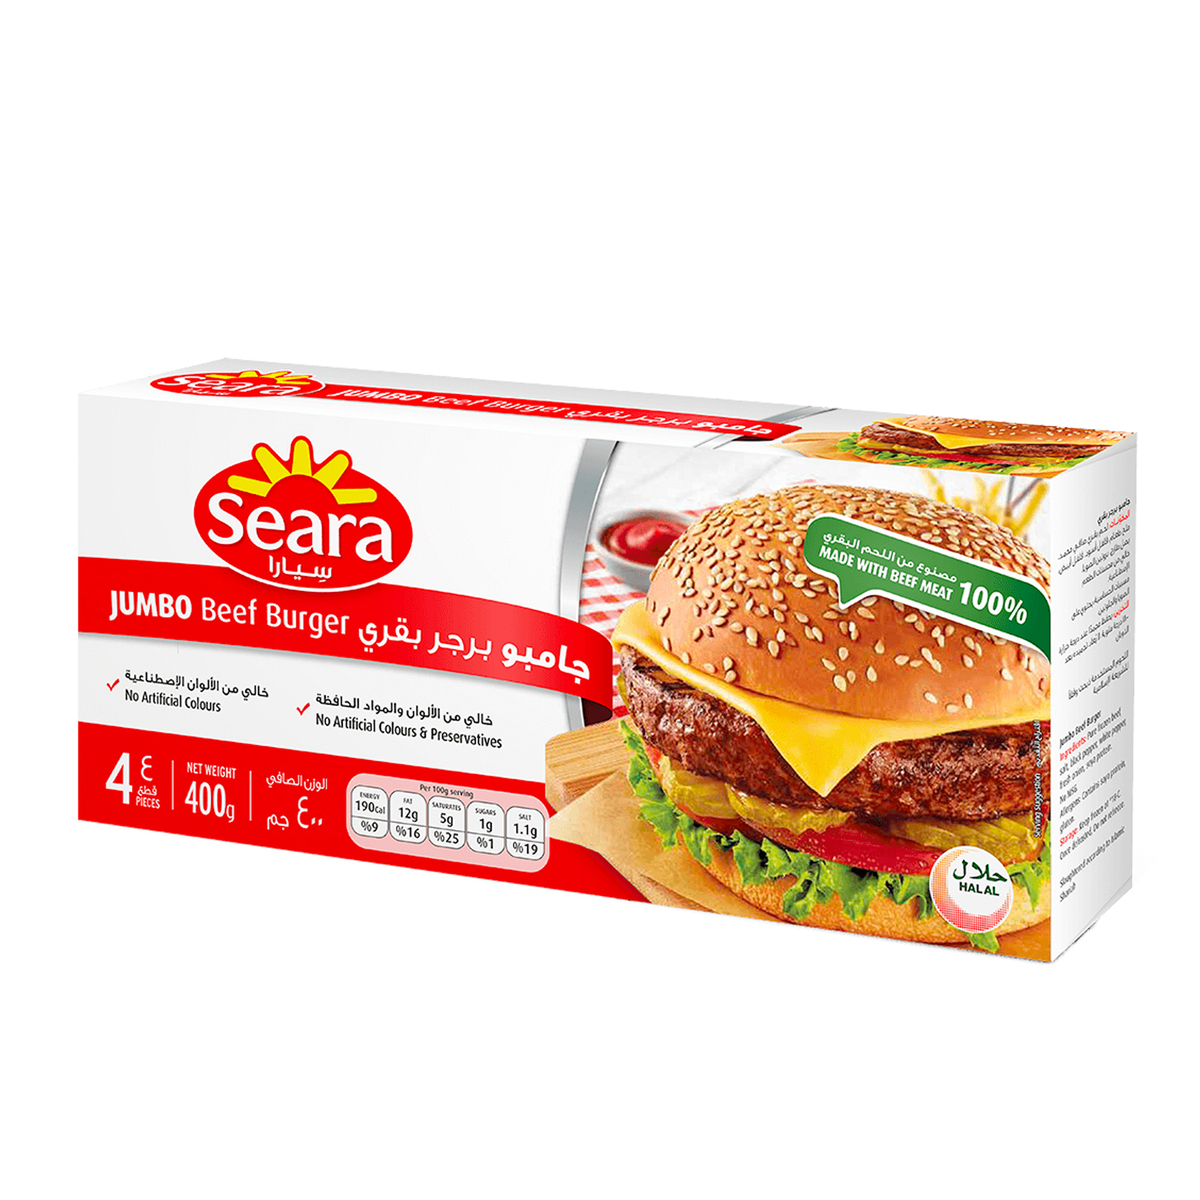 Seara Beef Burger Jumbo 4 pcs 400 g